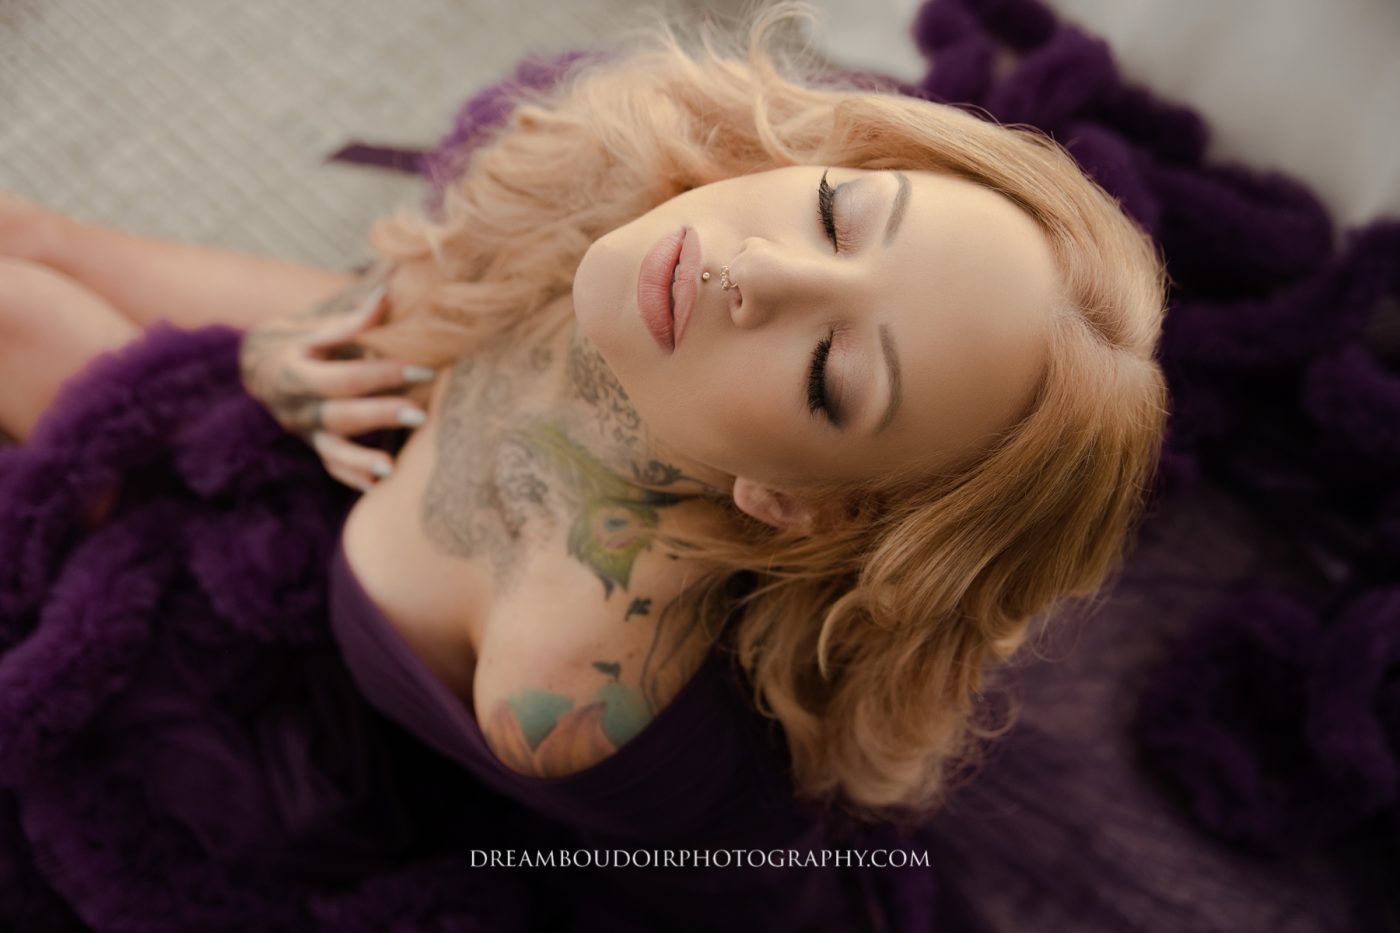 Dream Boudoir Photography – Toronto & Vancouver for Women